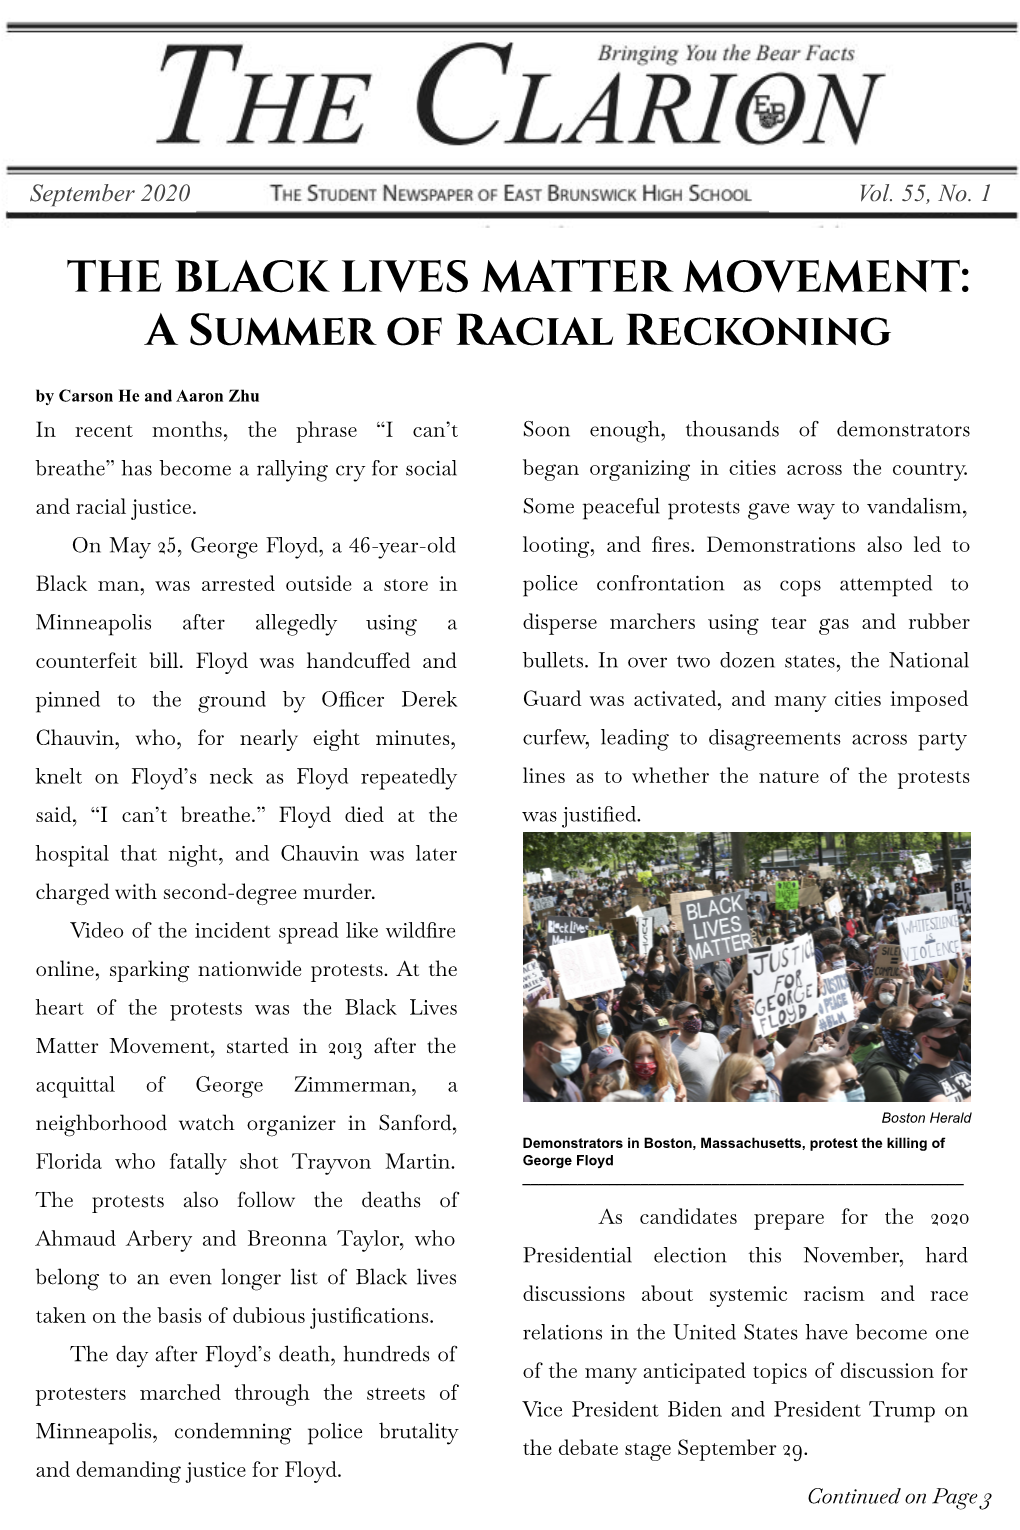 THE BLACK LIVES MATTER MOVEMENT: a Summer of Racial